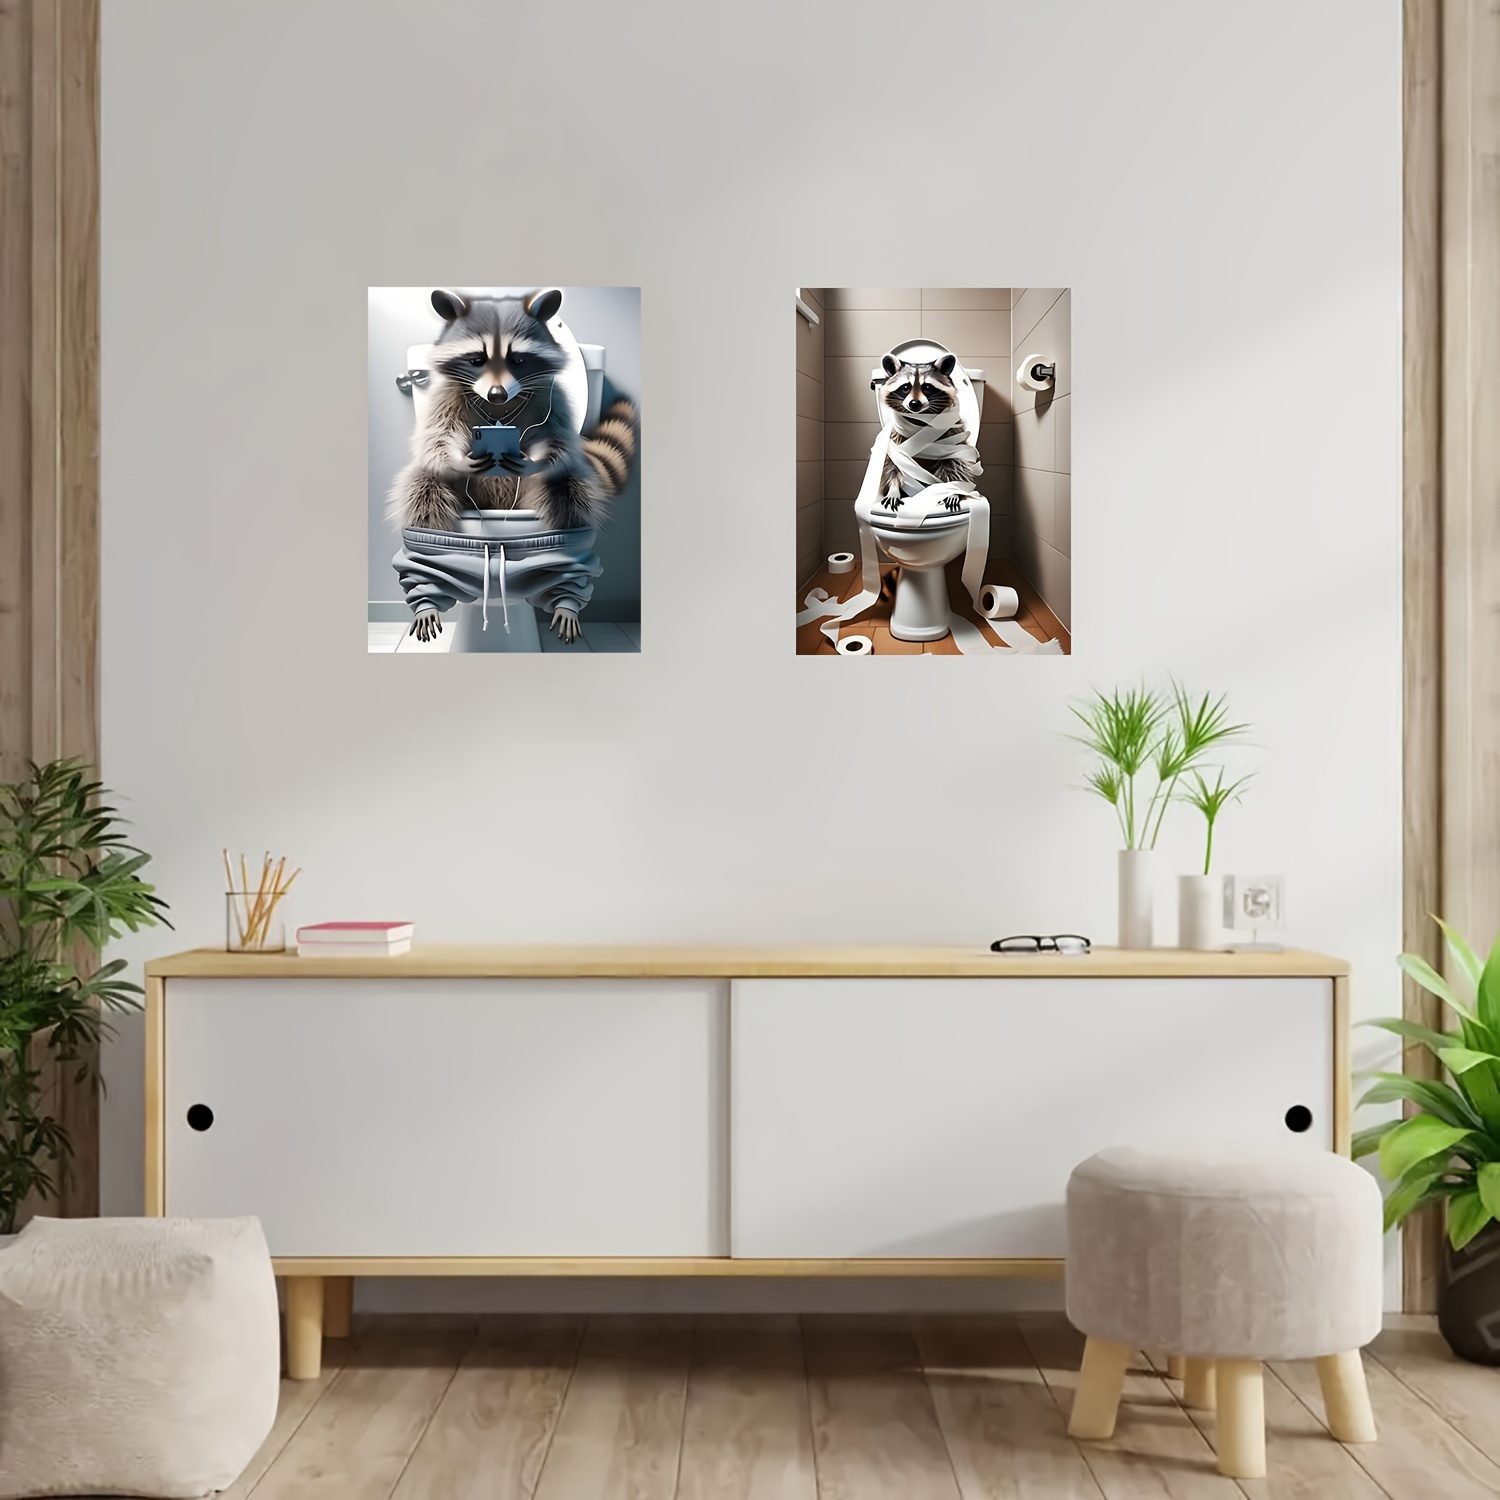 

Funny Raccoon On Toilet Canvas Art Print - Waterproof, Frameless Wall Decor For Bathroom, 12x16 Inch